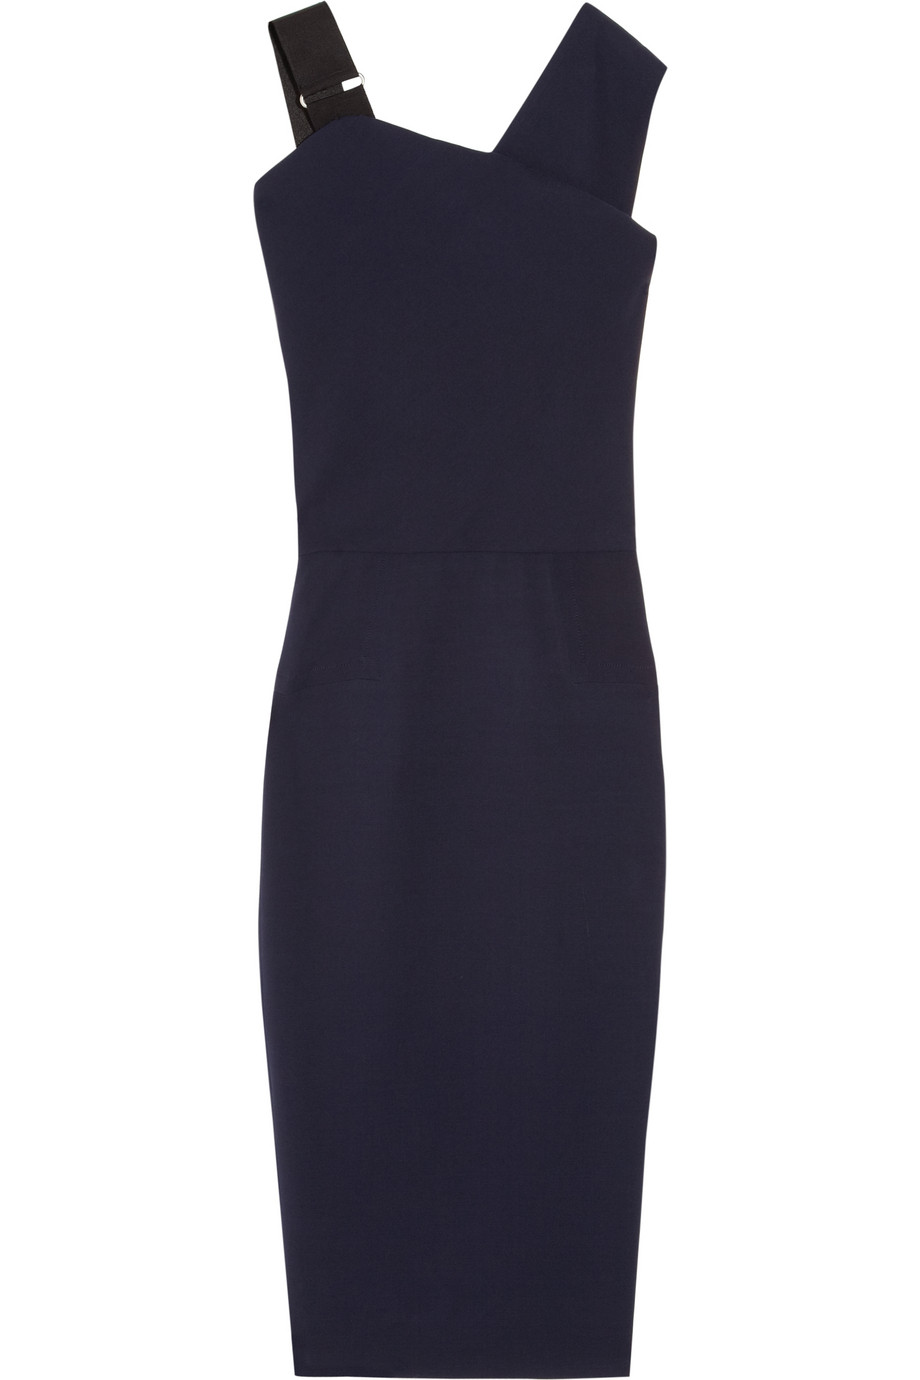 Victoria Beckham Asymmetric Wool and Silk-blend Dress in Blue (navy) | Lyst